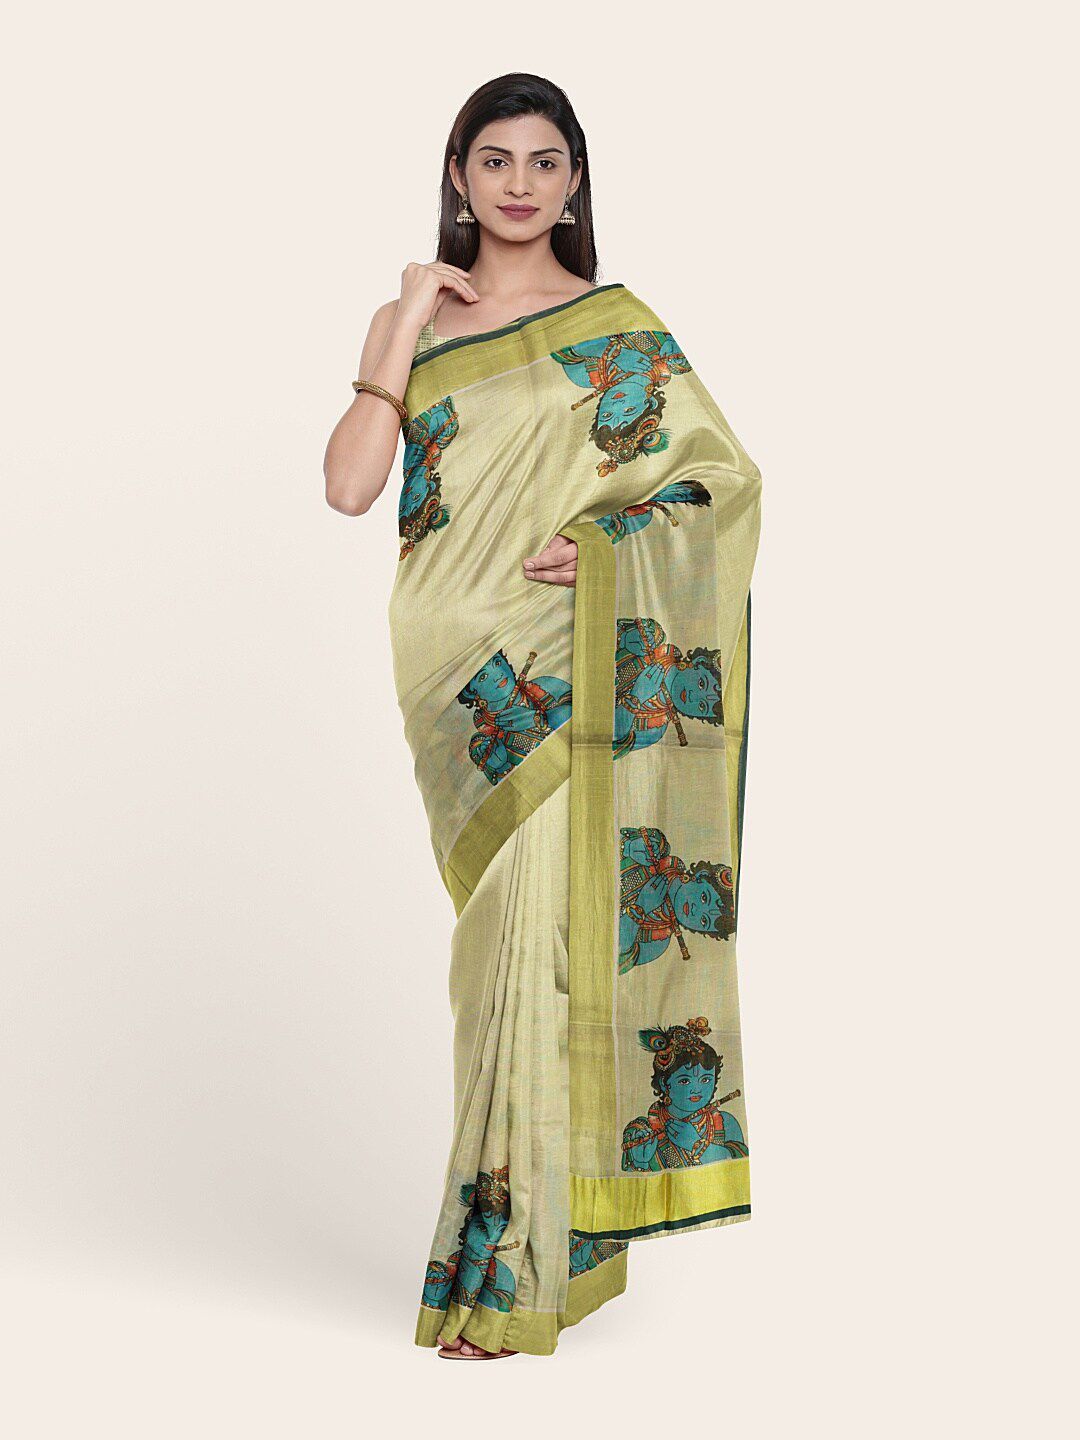 Pothys Women Gold-Toned & Blue Ethnic Motifs Zari Pure Cotton Saree Price in India